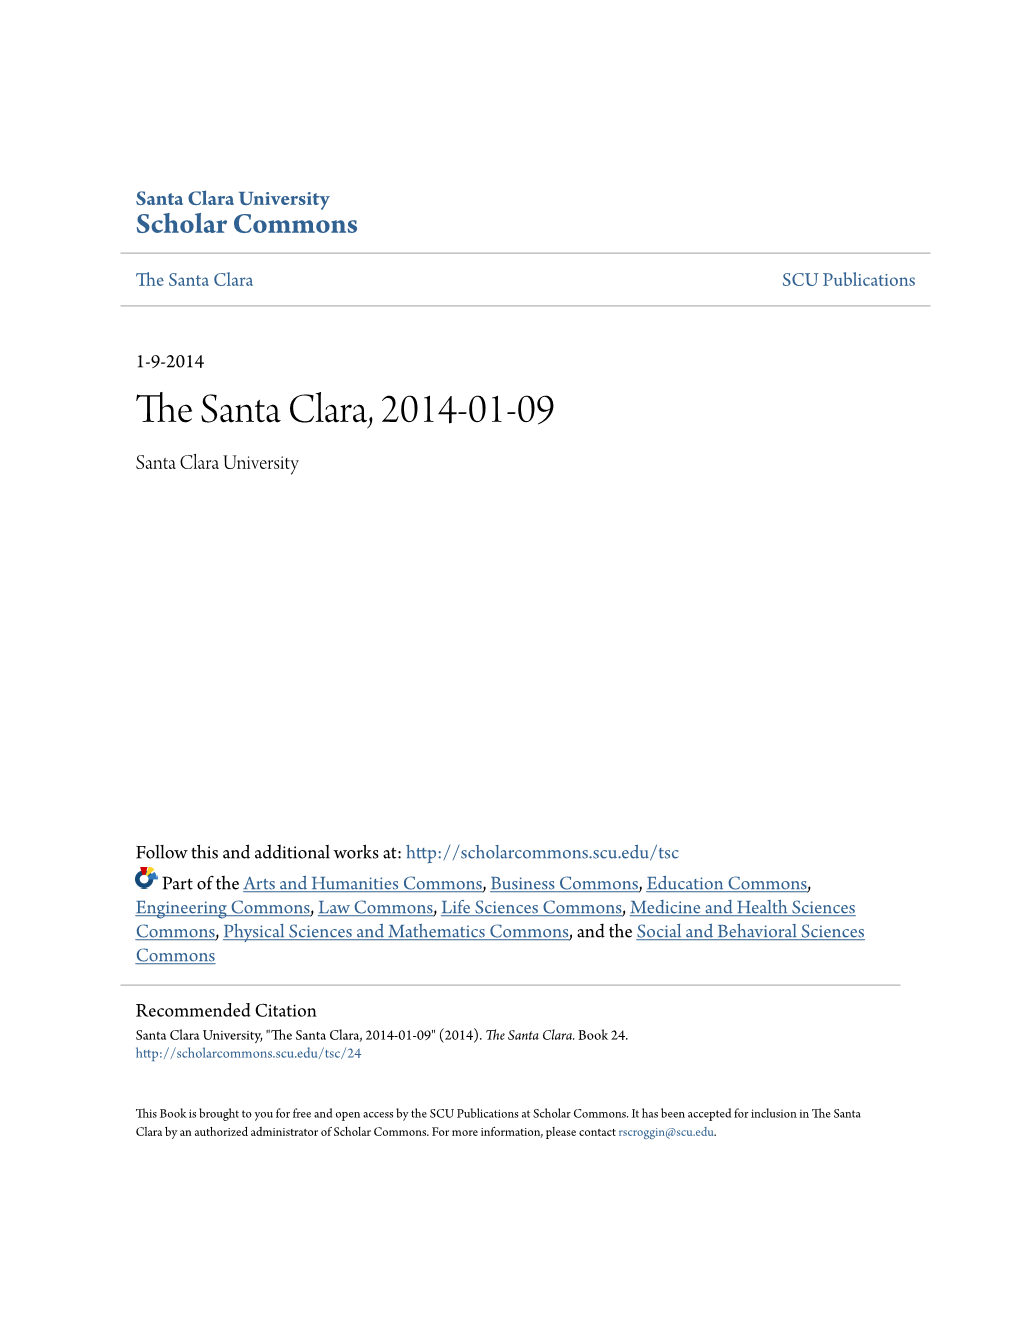 The Santa Clara, 2014-01-09